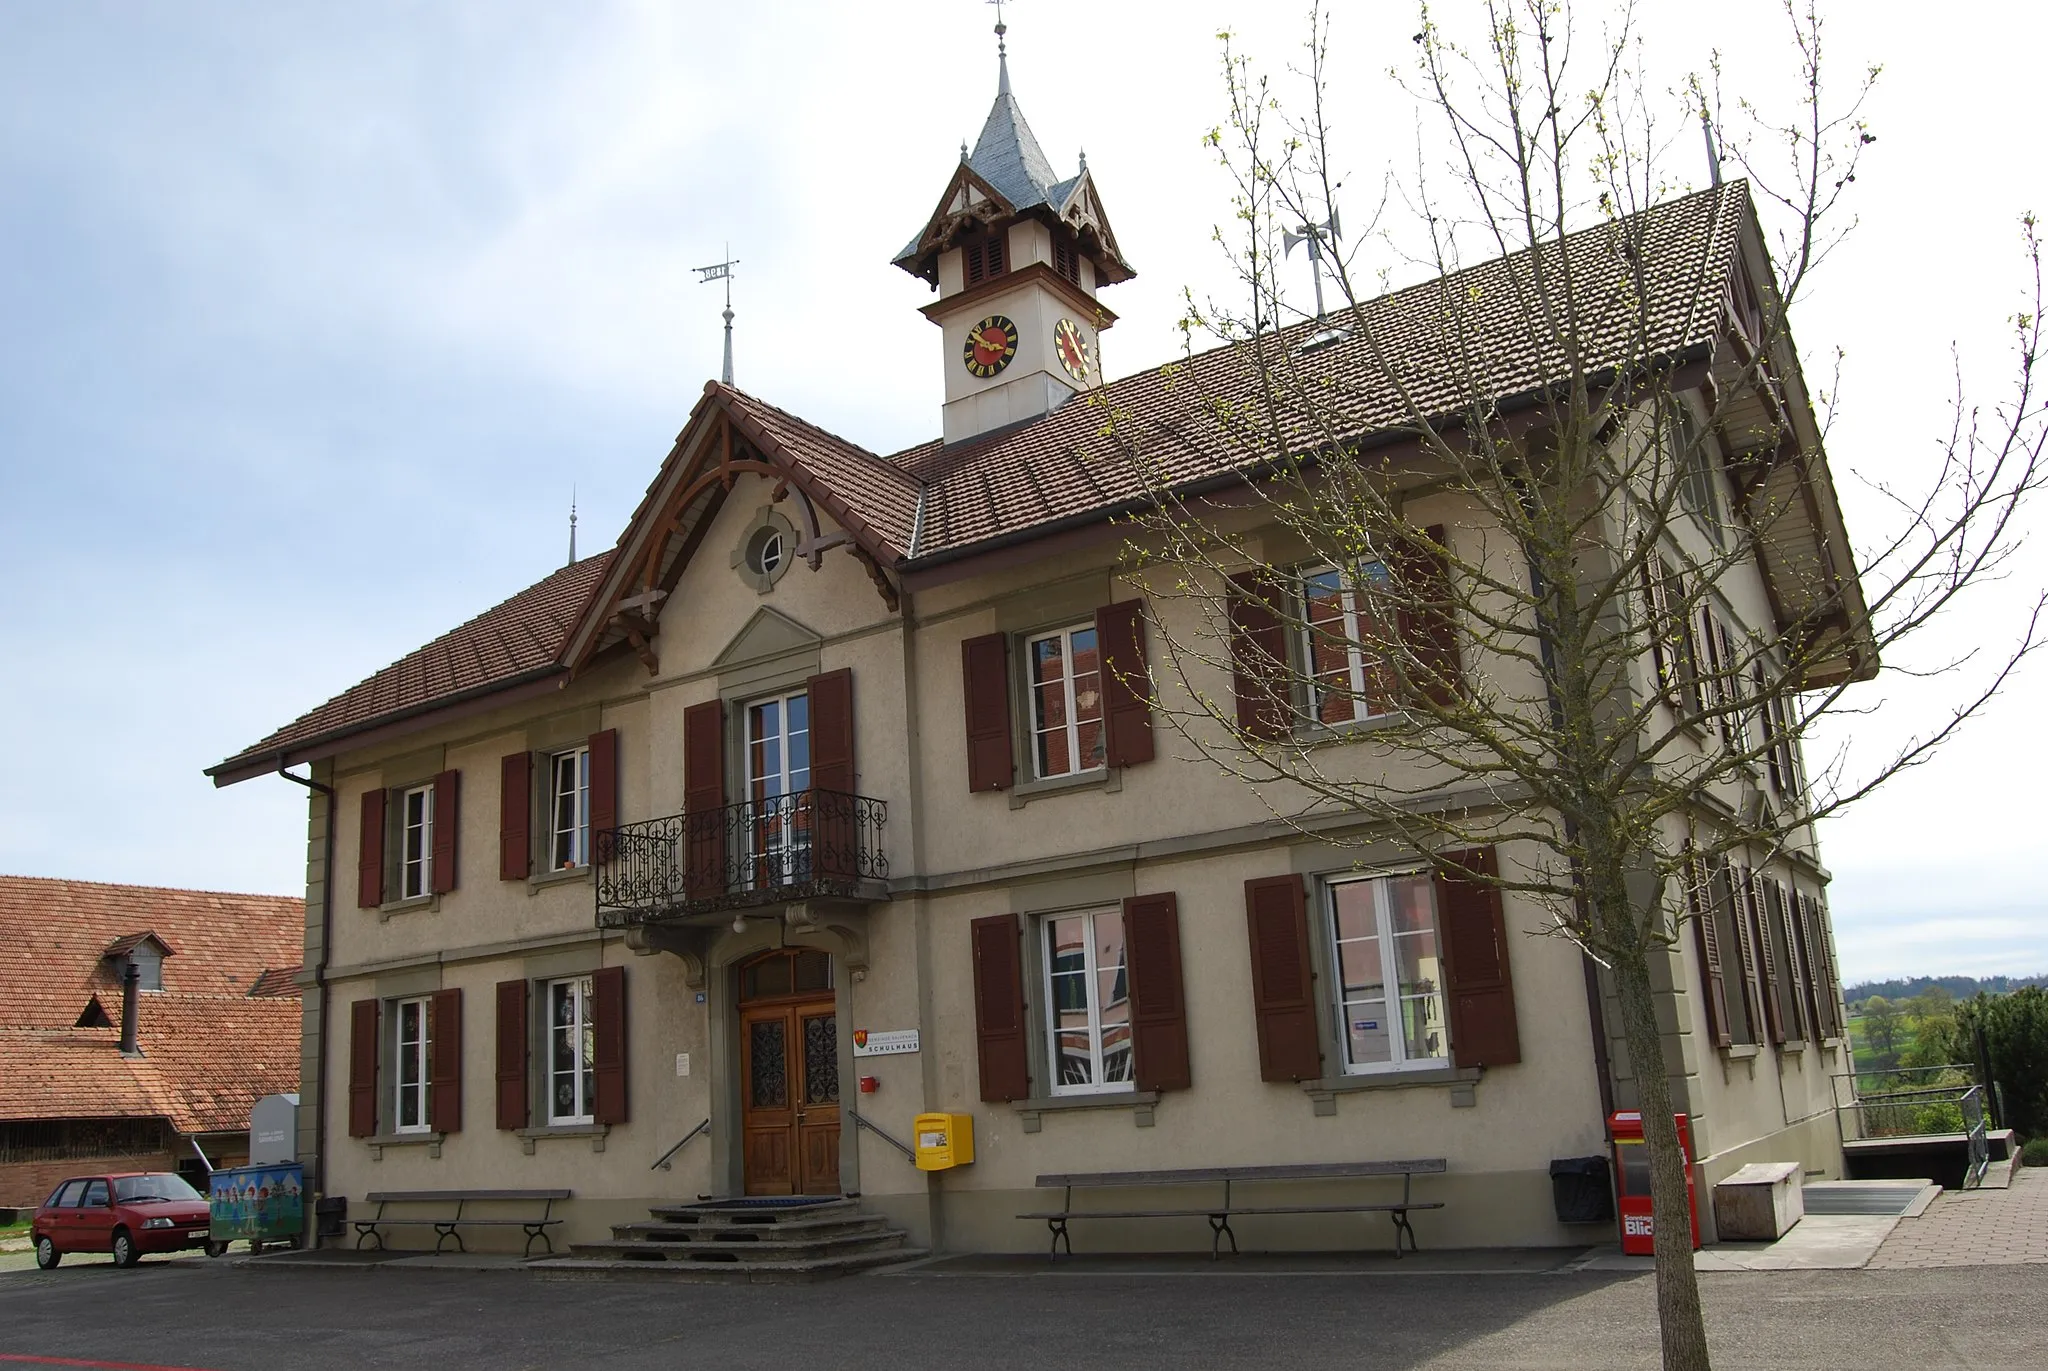 Photo showing: School building of Salvenach, canton of Fribourg, Switzerland